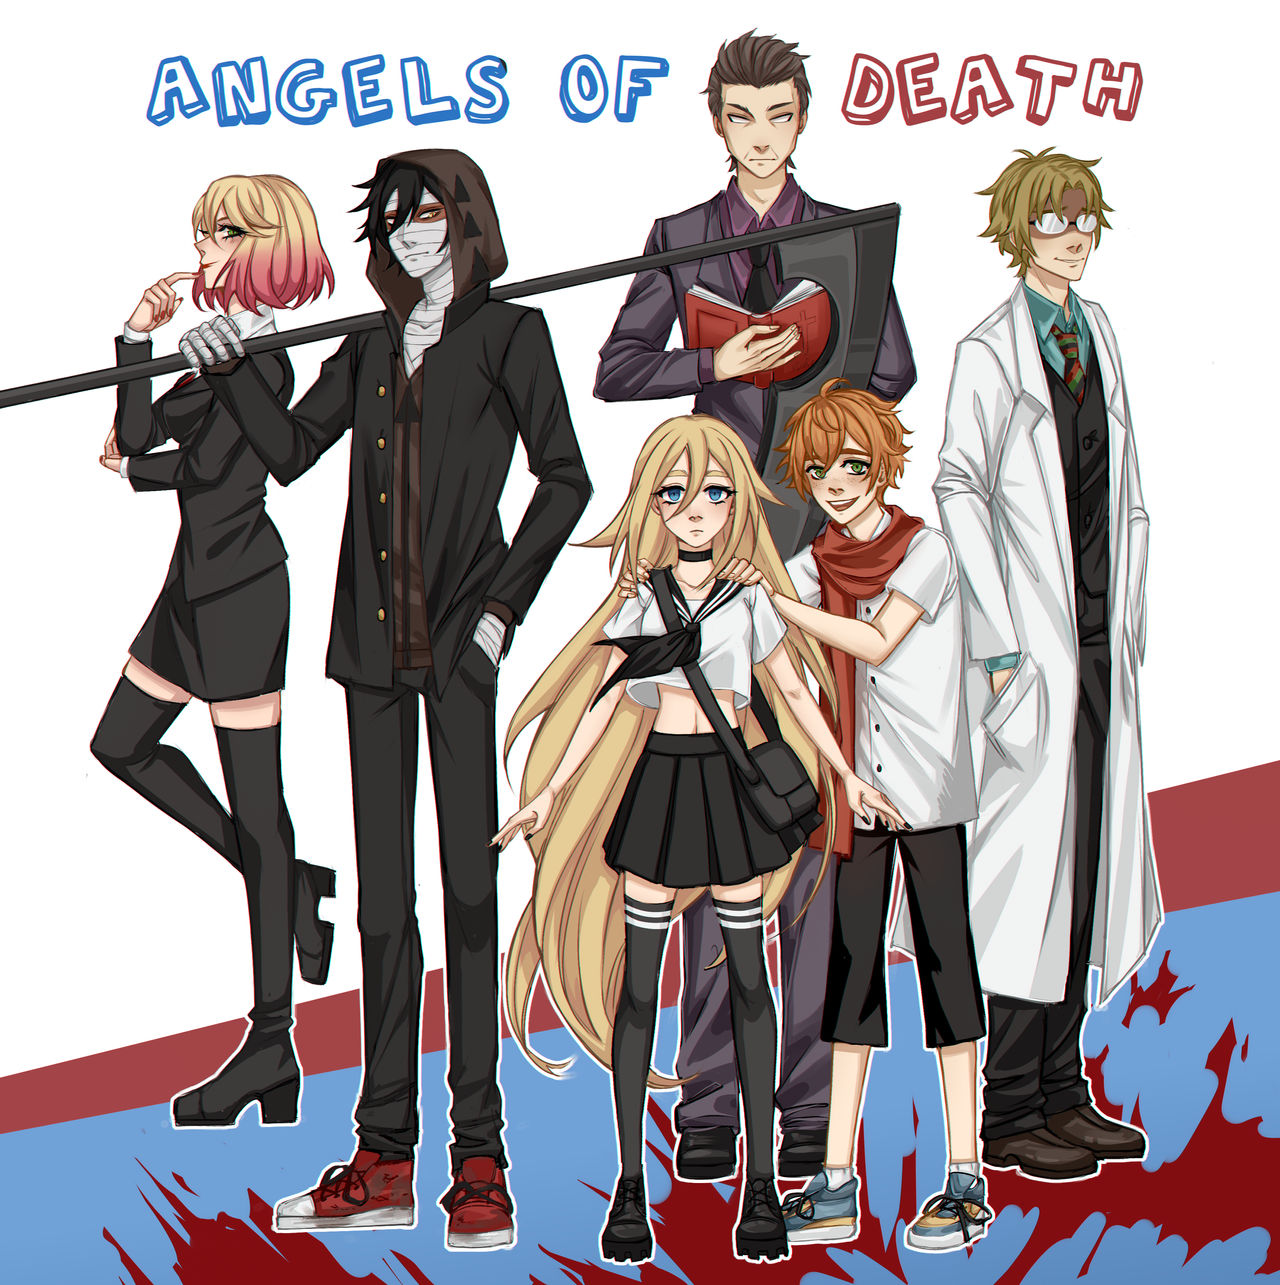 Angels of Death #01 / Satsuriku no Tenshi by Anmik on DeviantArt